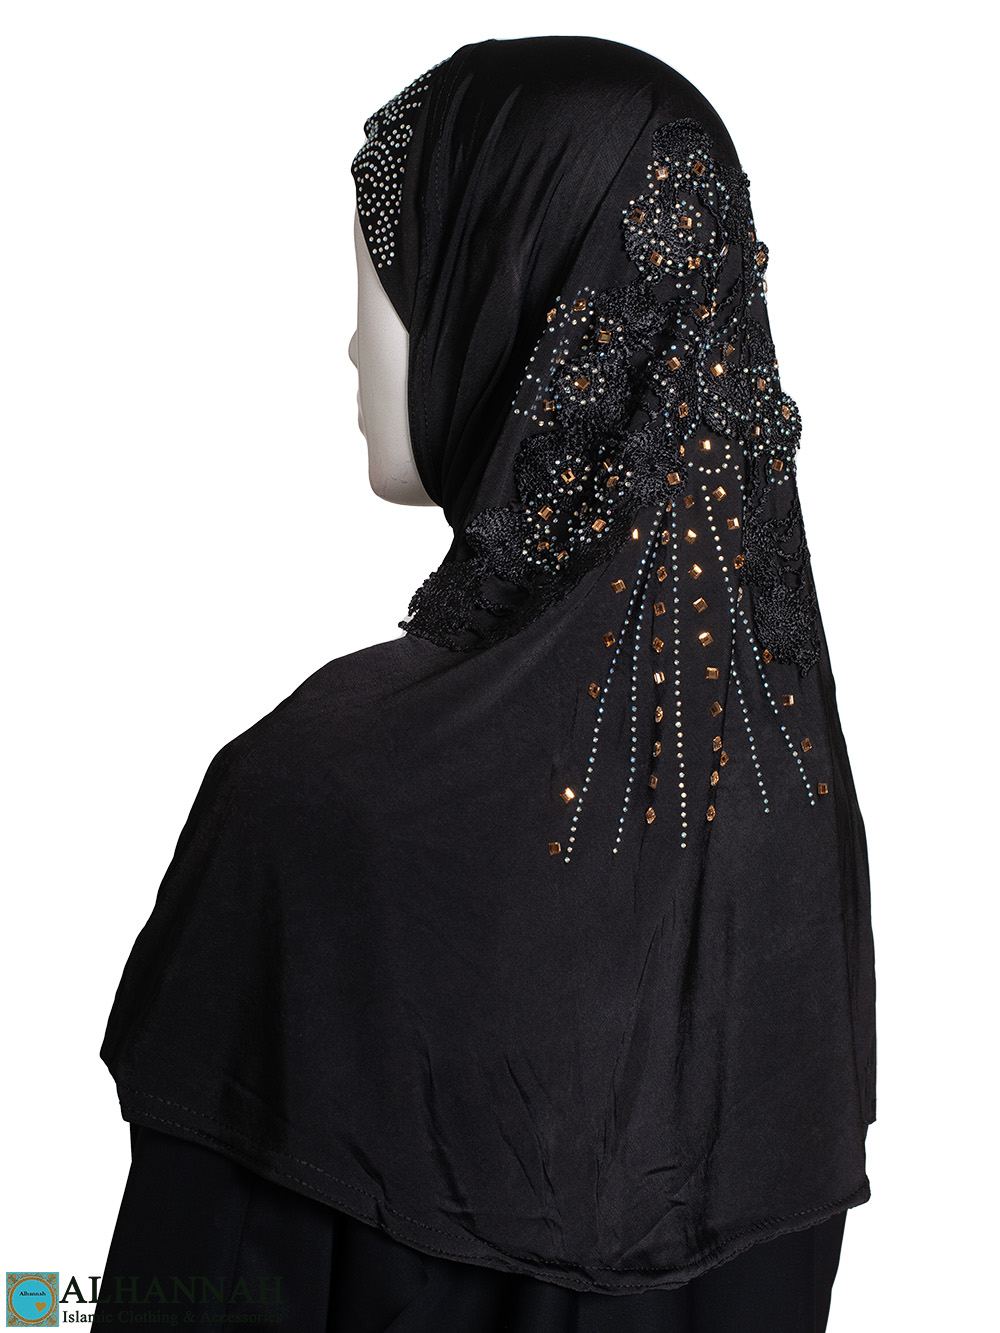 Amira Hijab with Floral Applique - Black hi2451